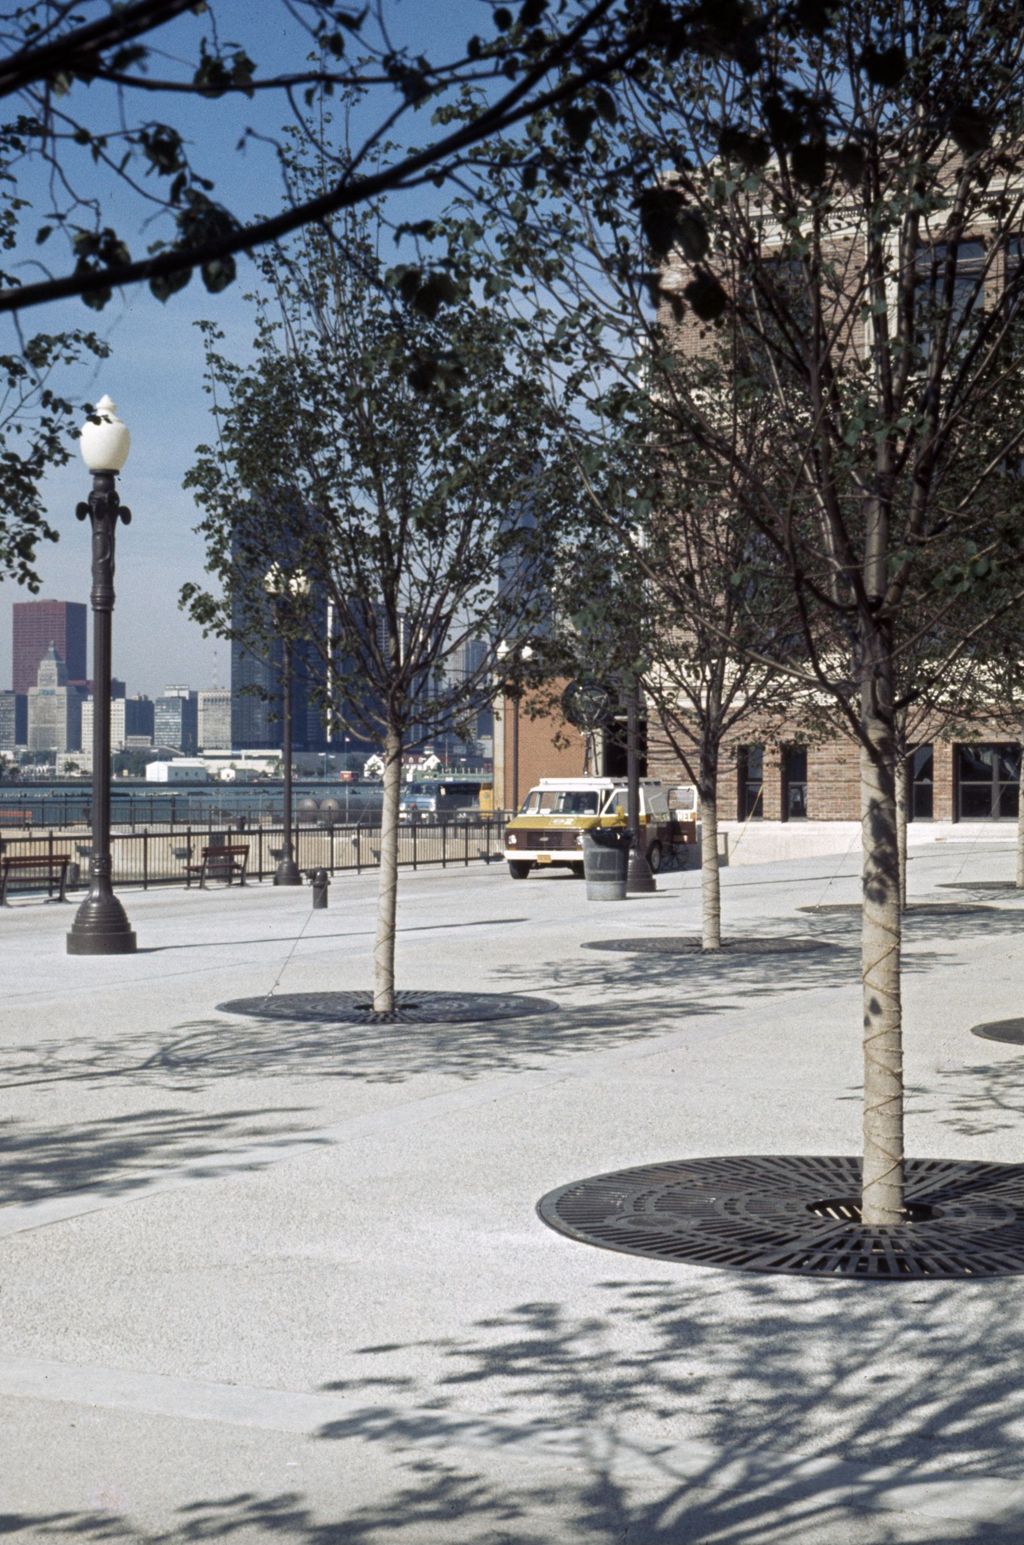 Landscaped plaza adjacent to Navy Pier terminal building